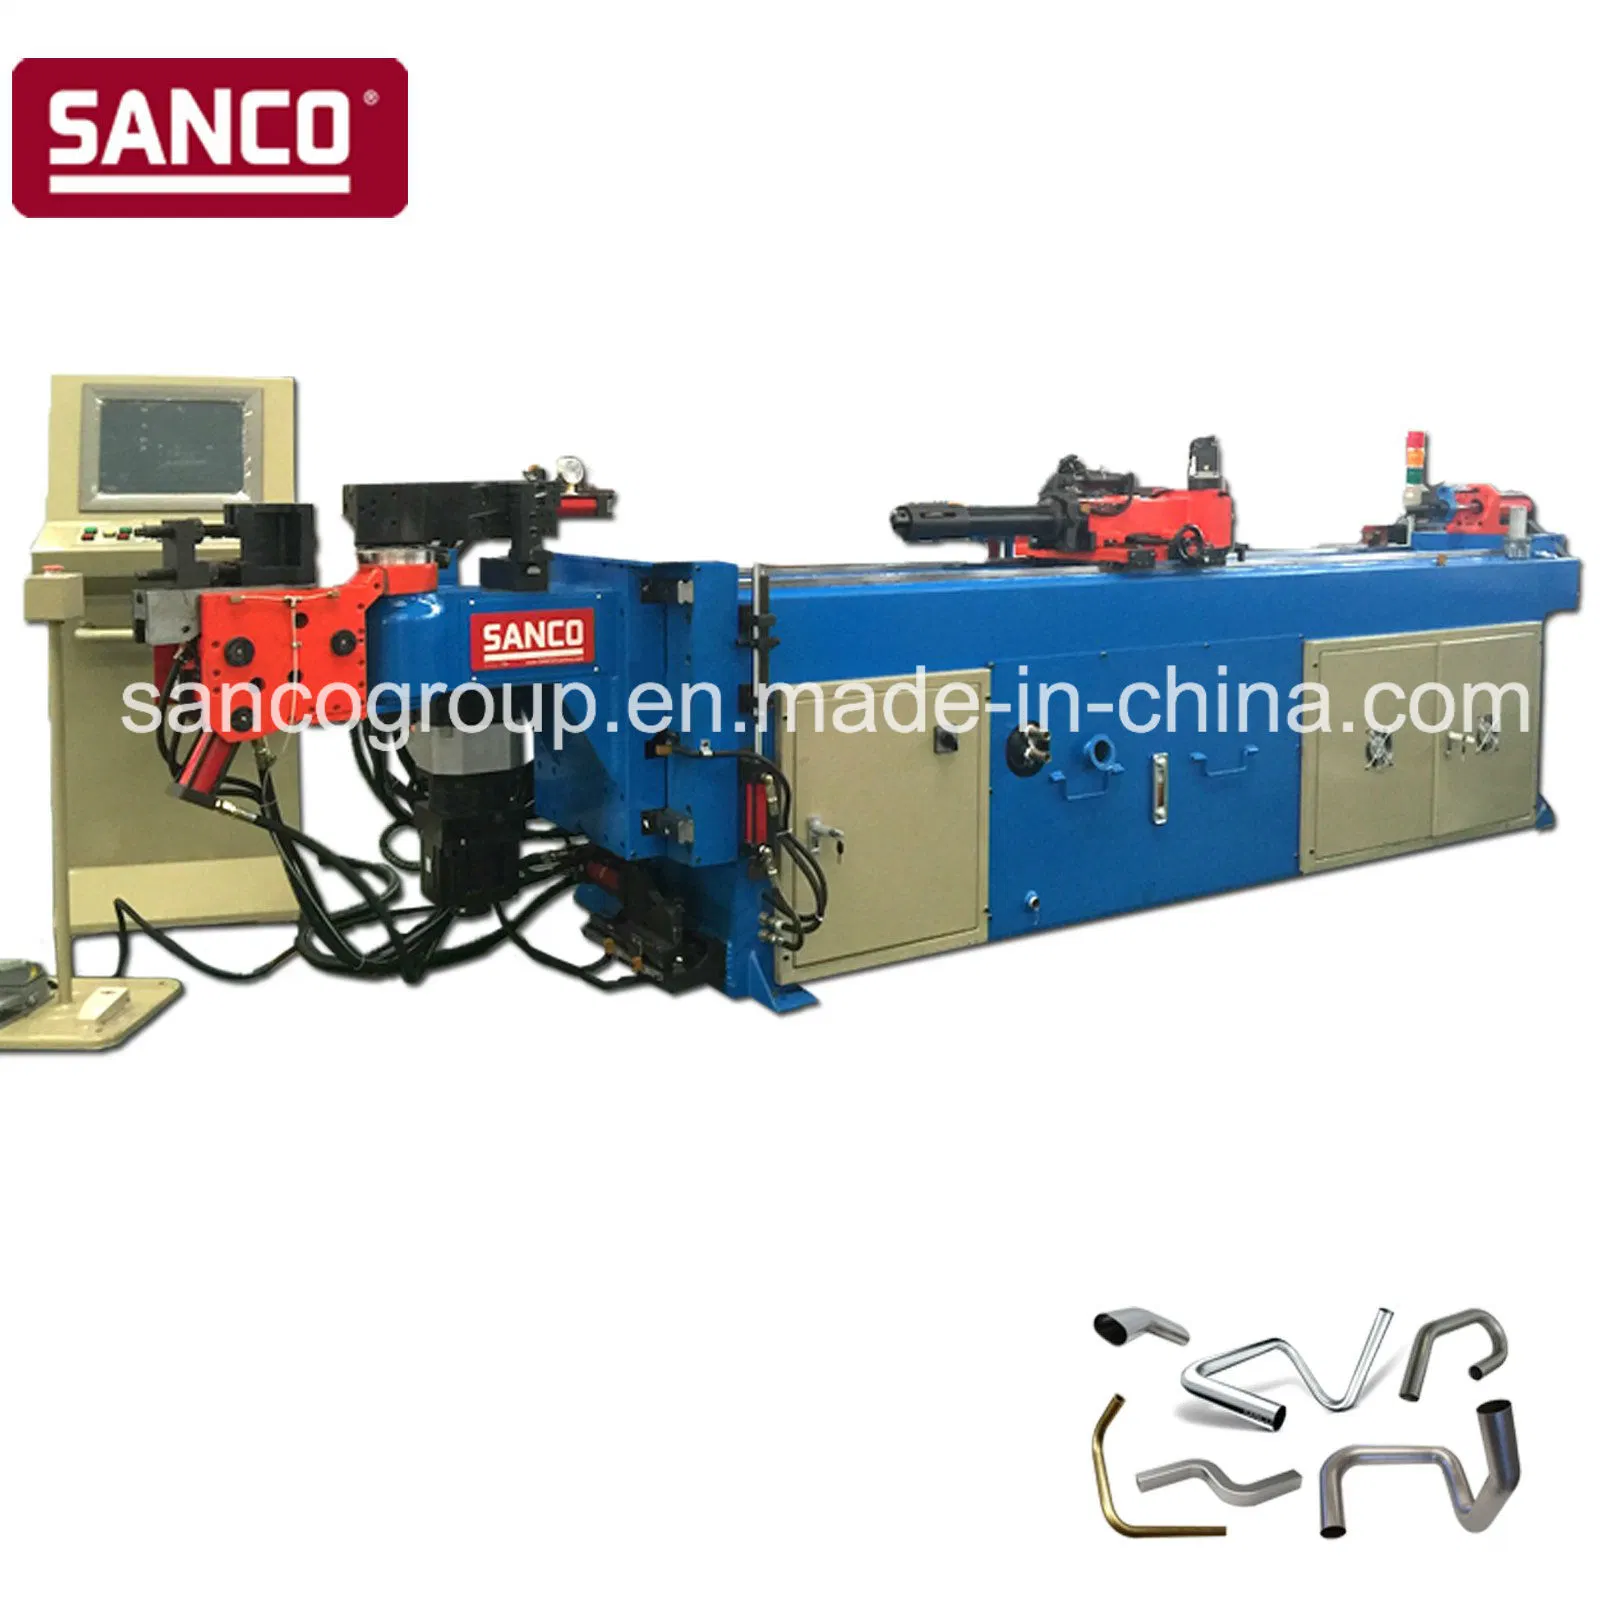 Sanco Mandrel Steel Pipe Tube Bending Machine for Aviation Used in India